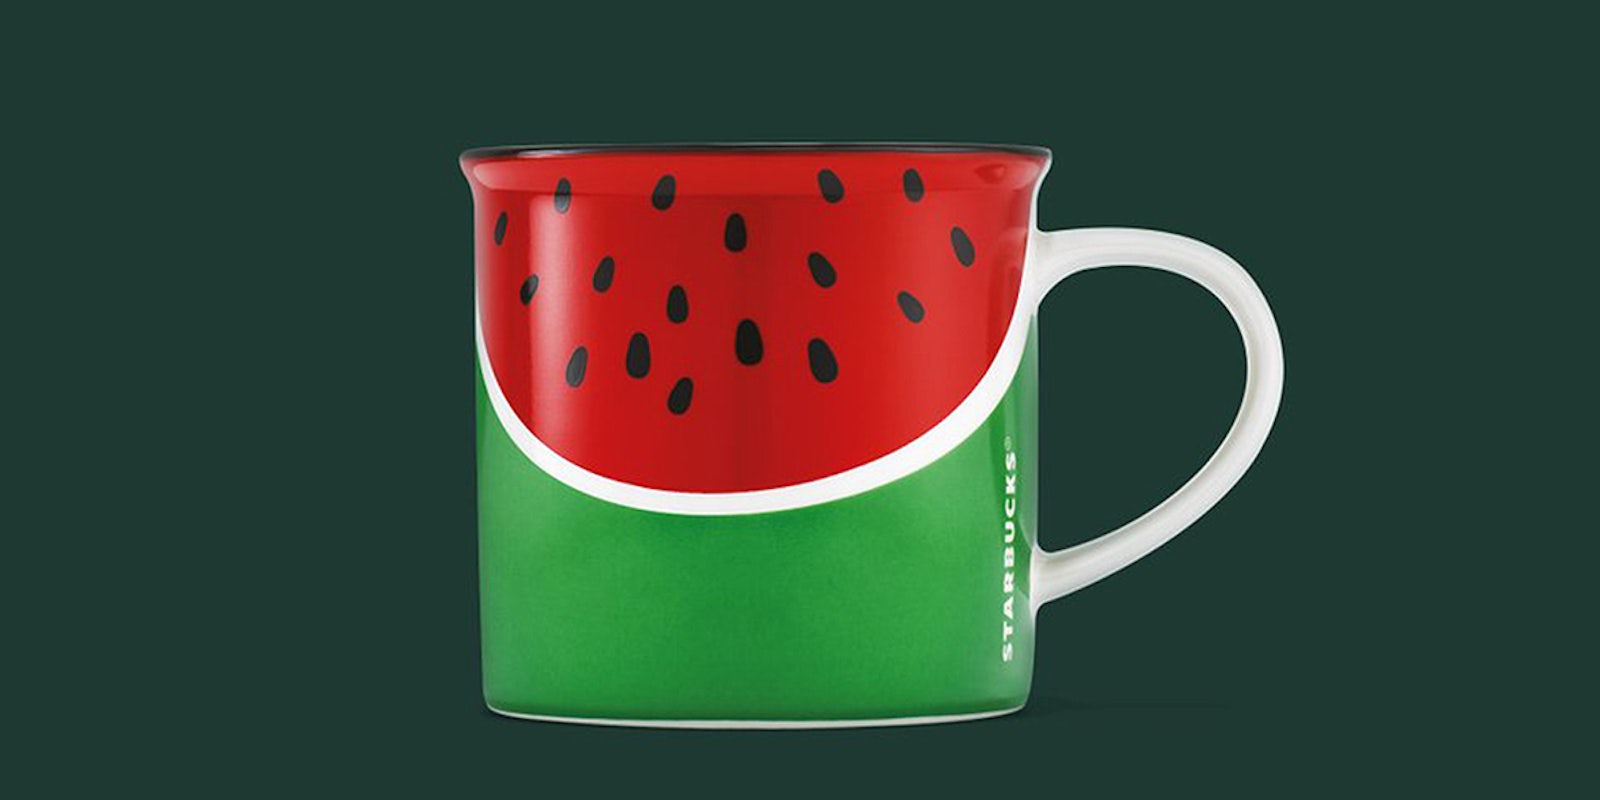 Starbucks Watermelon Mug in front of green background